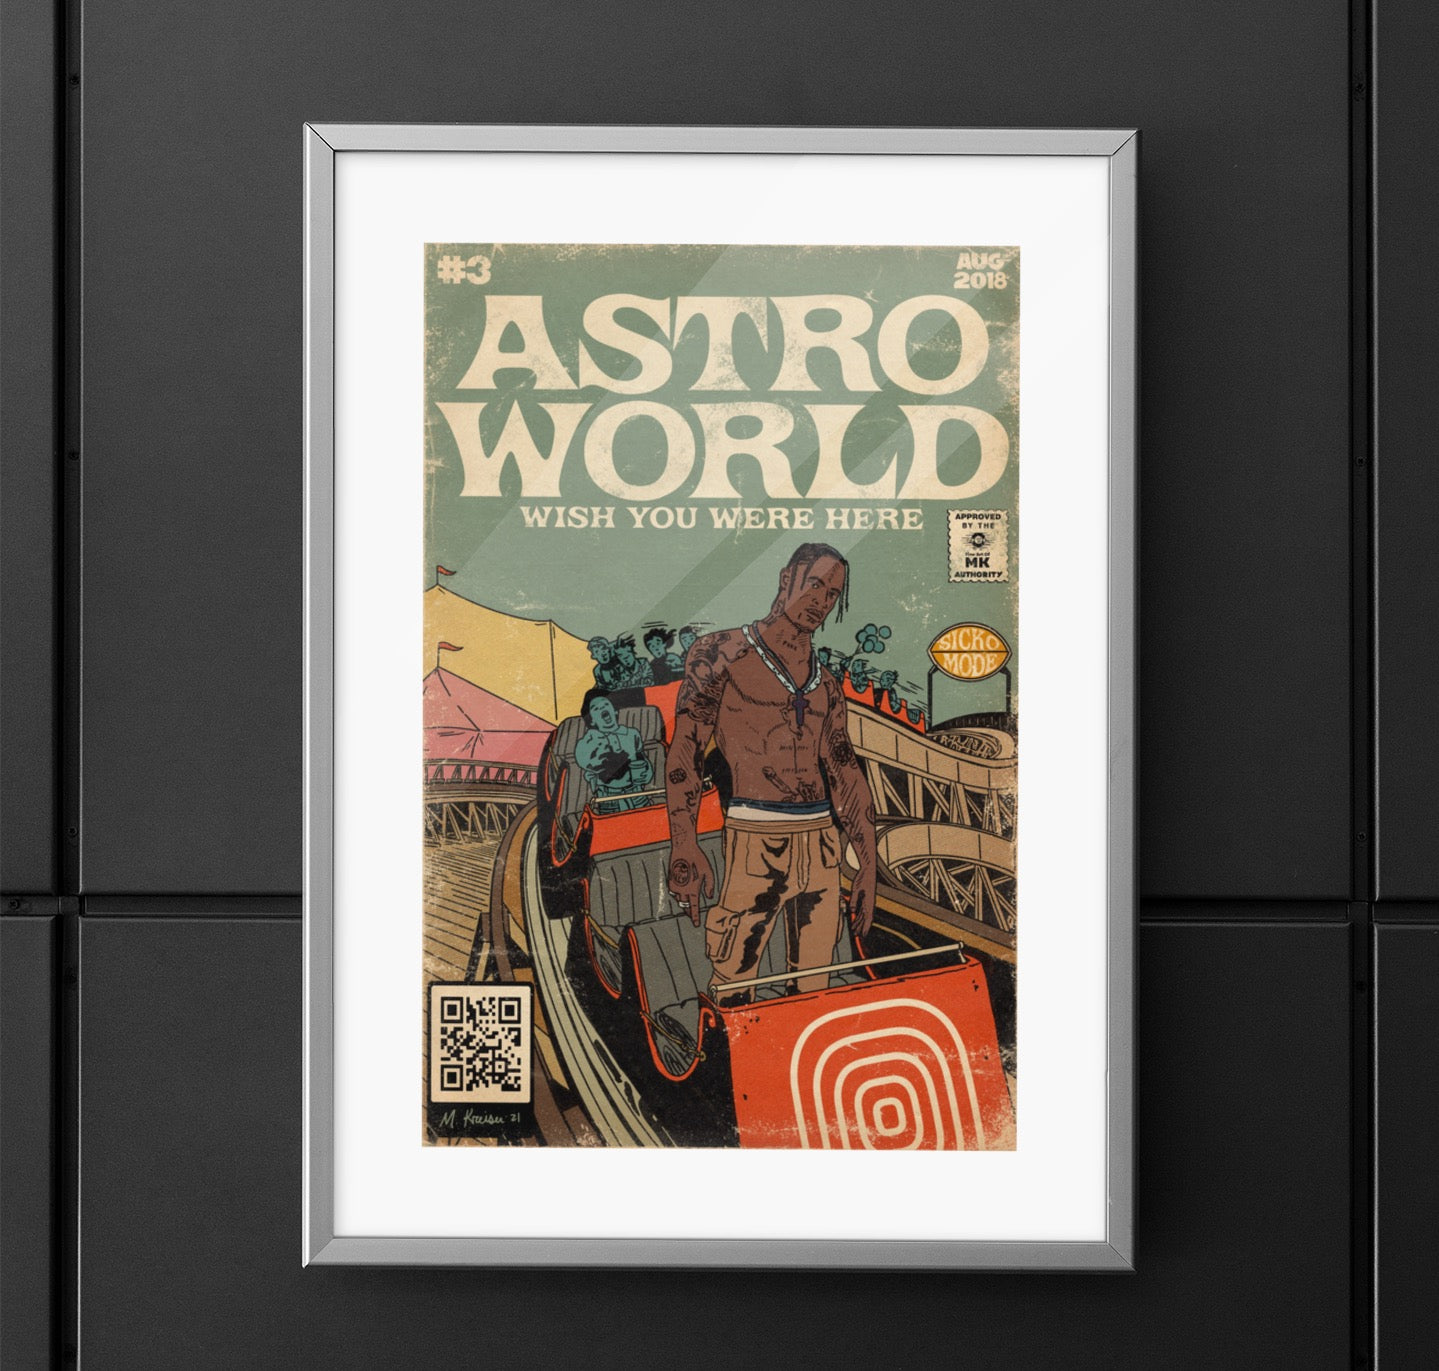 Astroworld art  Poster by Neylefleur